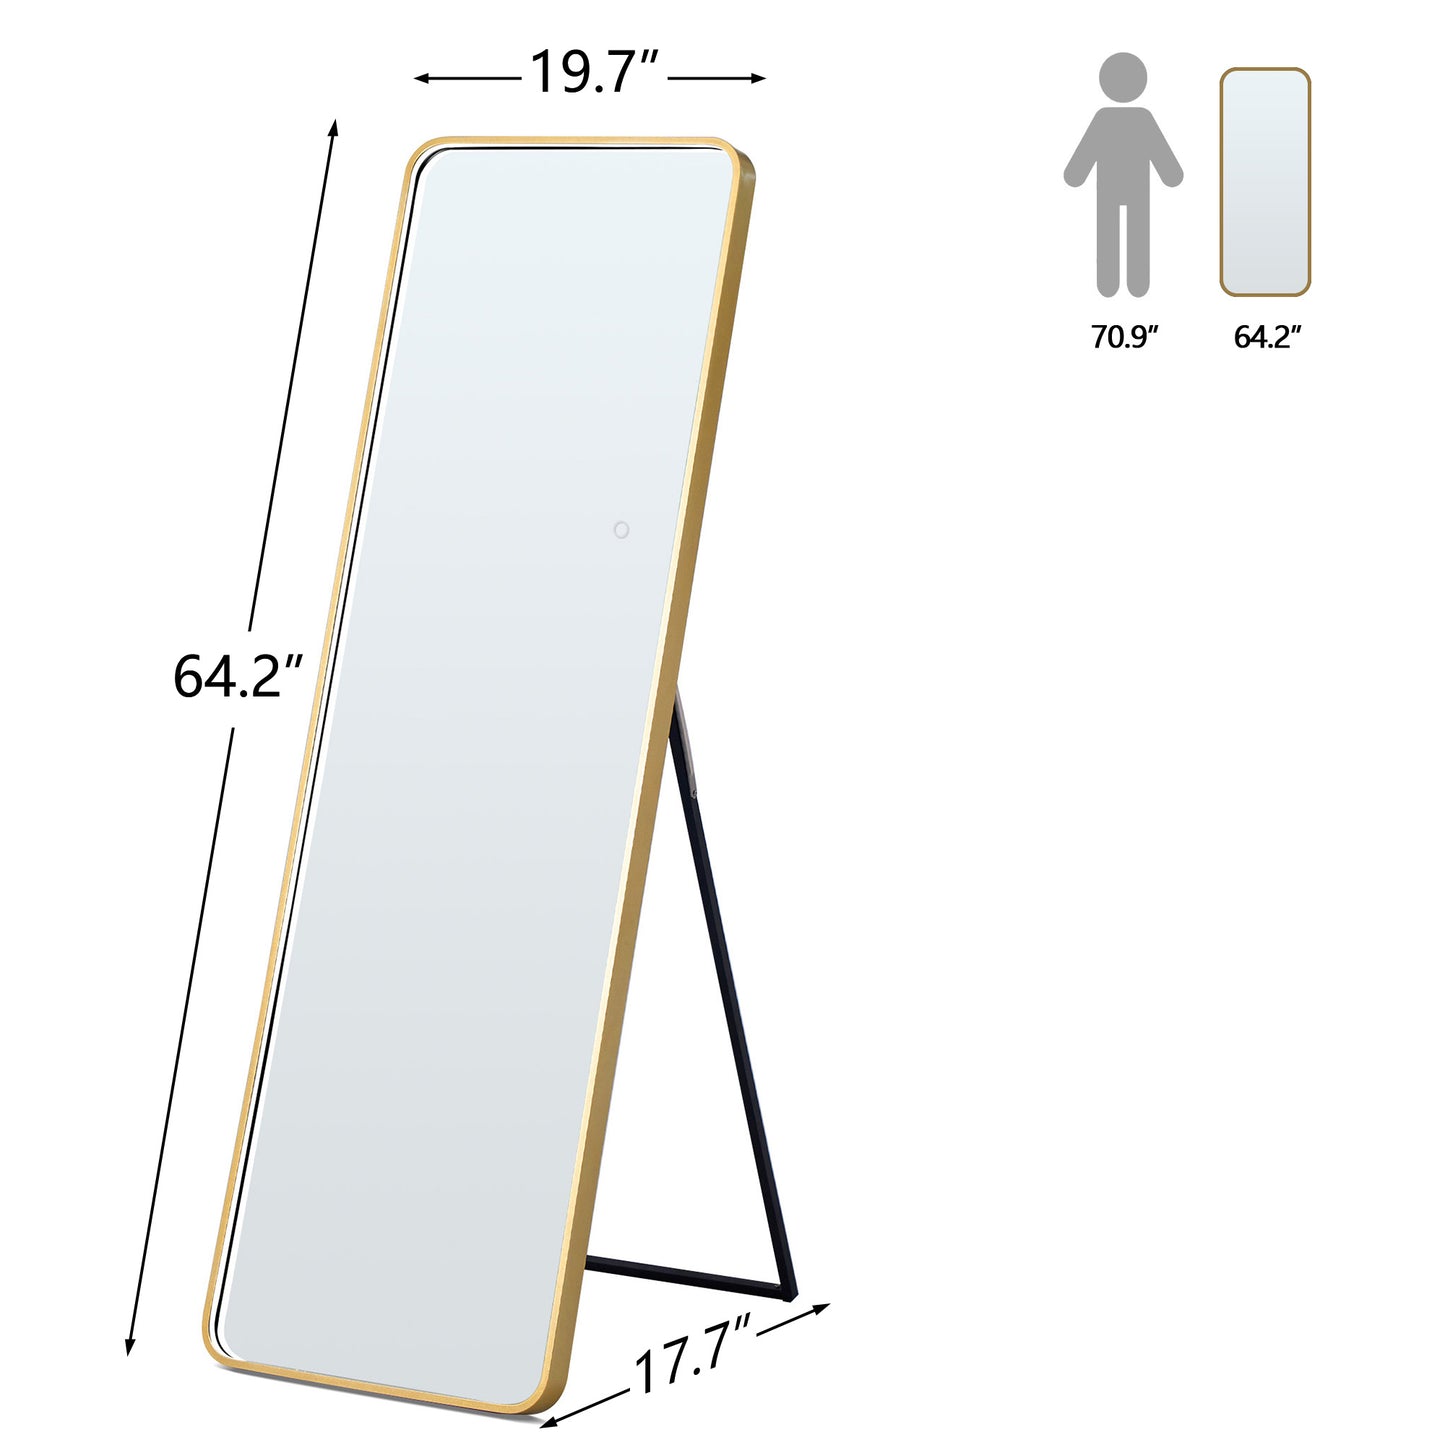 Soges Premium Full-Length Dressing Mirror with Floor Stand, Built-in LED Lights Golden